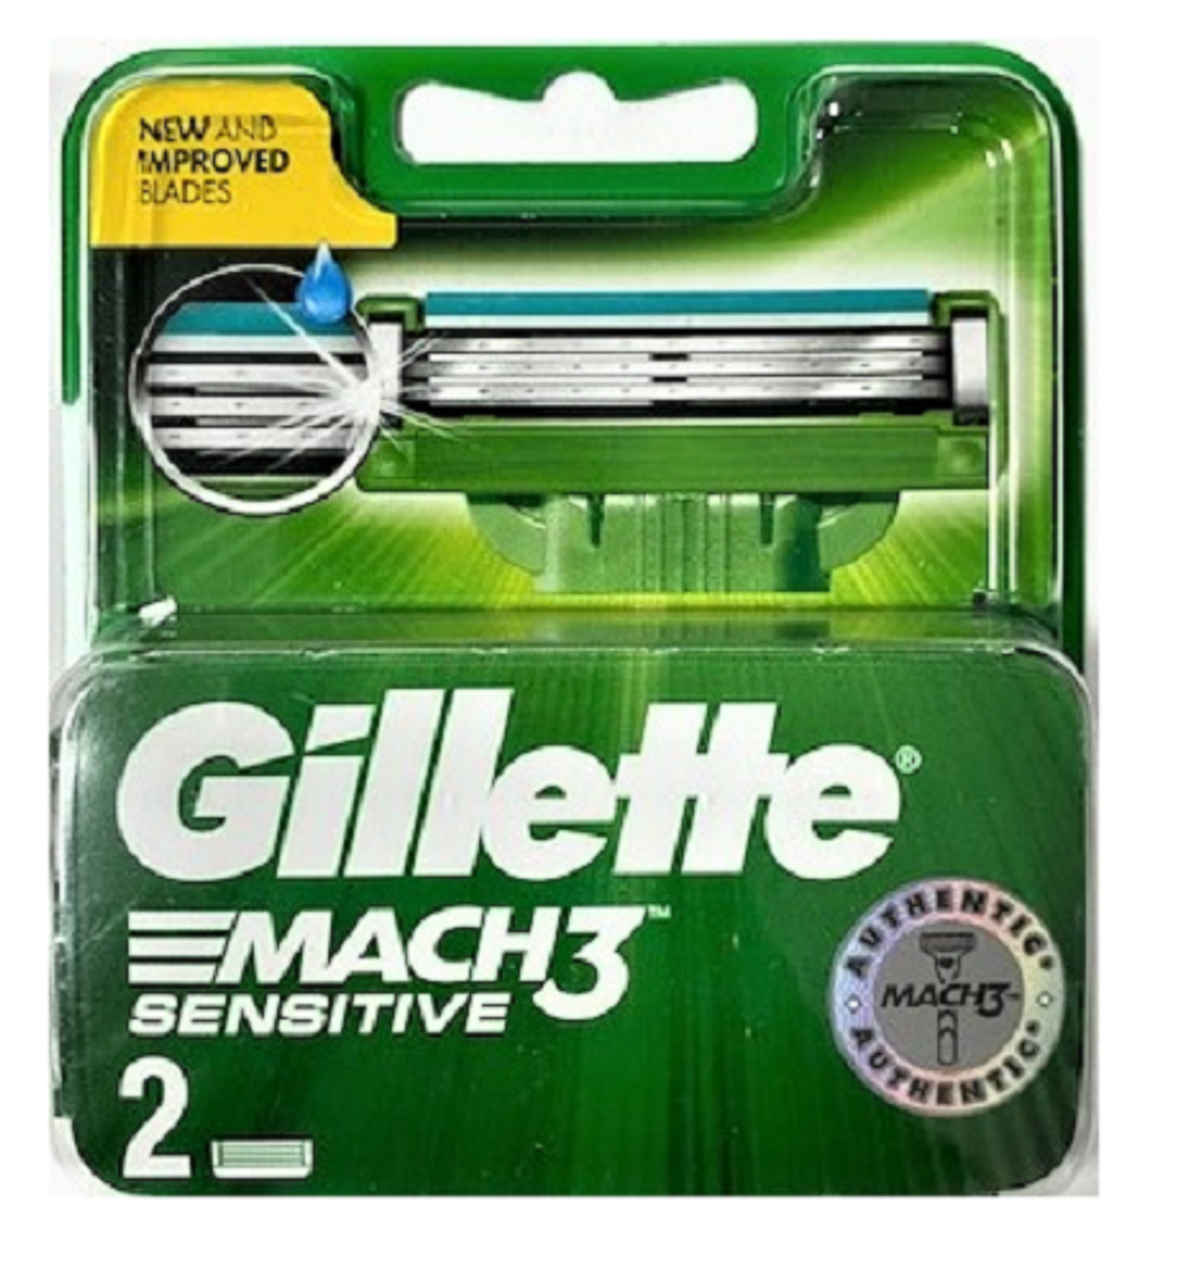 Gillette Mach3 Sensitive - Manual Shaving Razor Blades Cartridge, 2 pcs